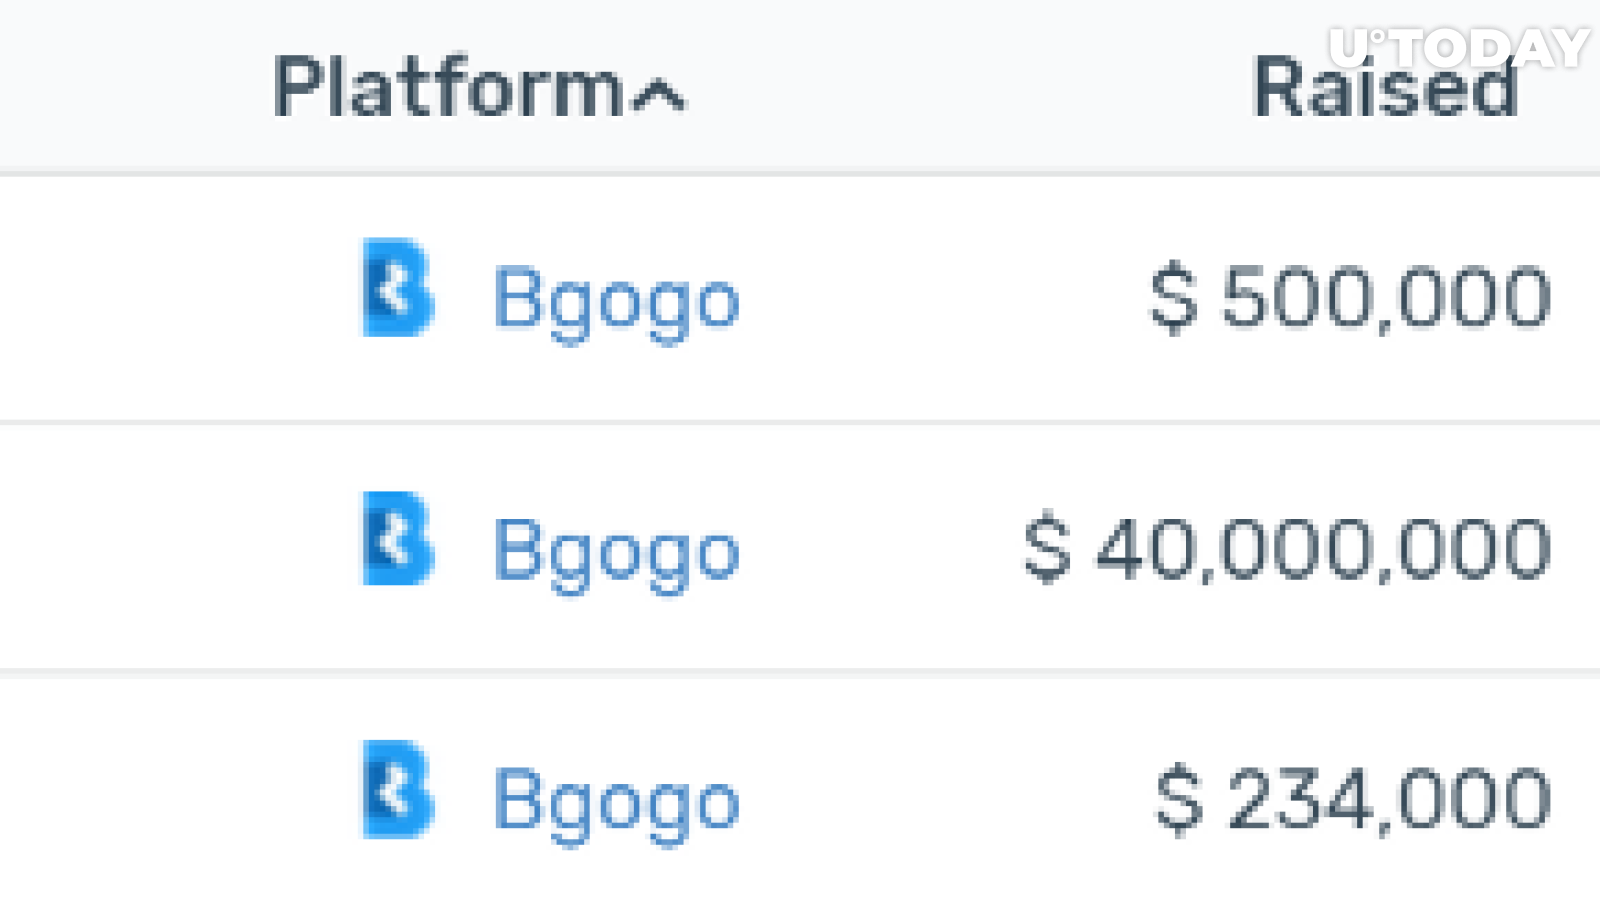 Bgogo Current AVG ROI: 40%